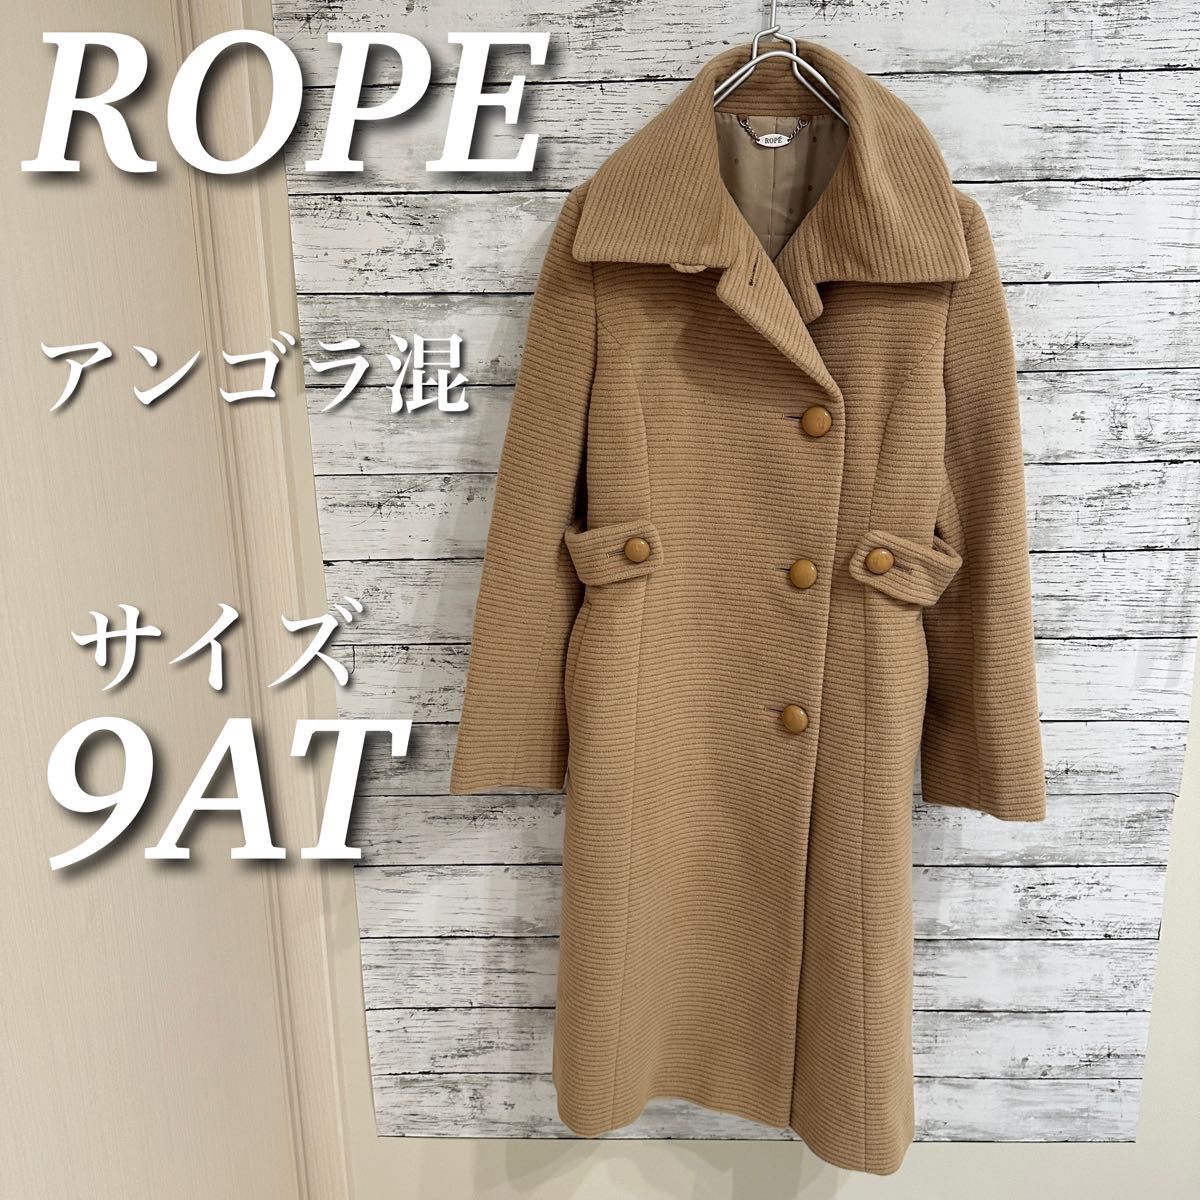 ROPE ロペ　ロングコート　ウール　アンゴラ混　アウター　日本製　ベージュ　サイズ9AT